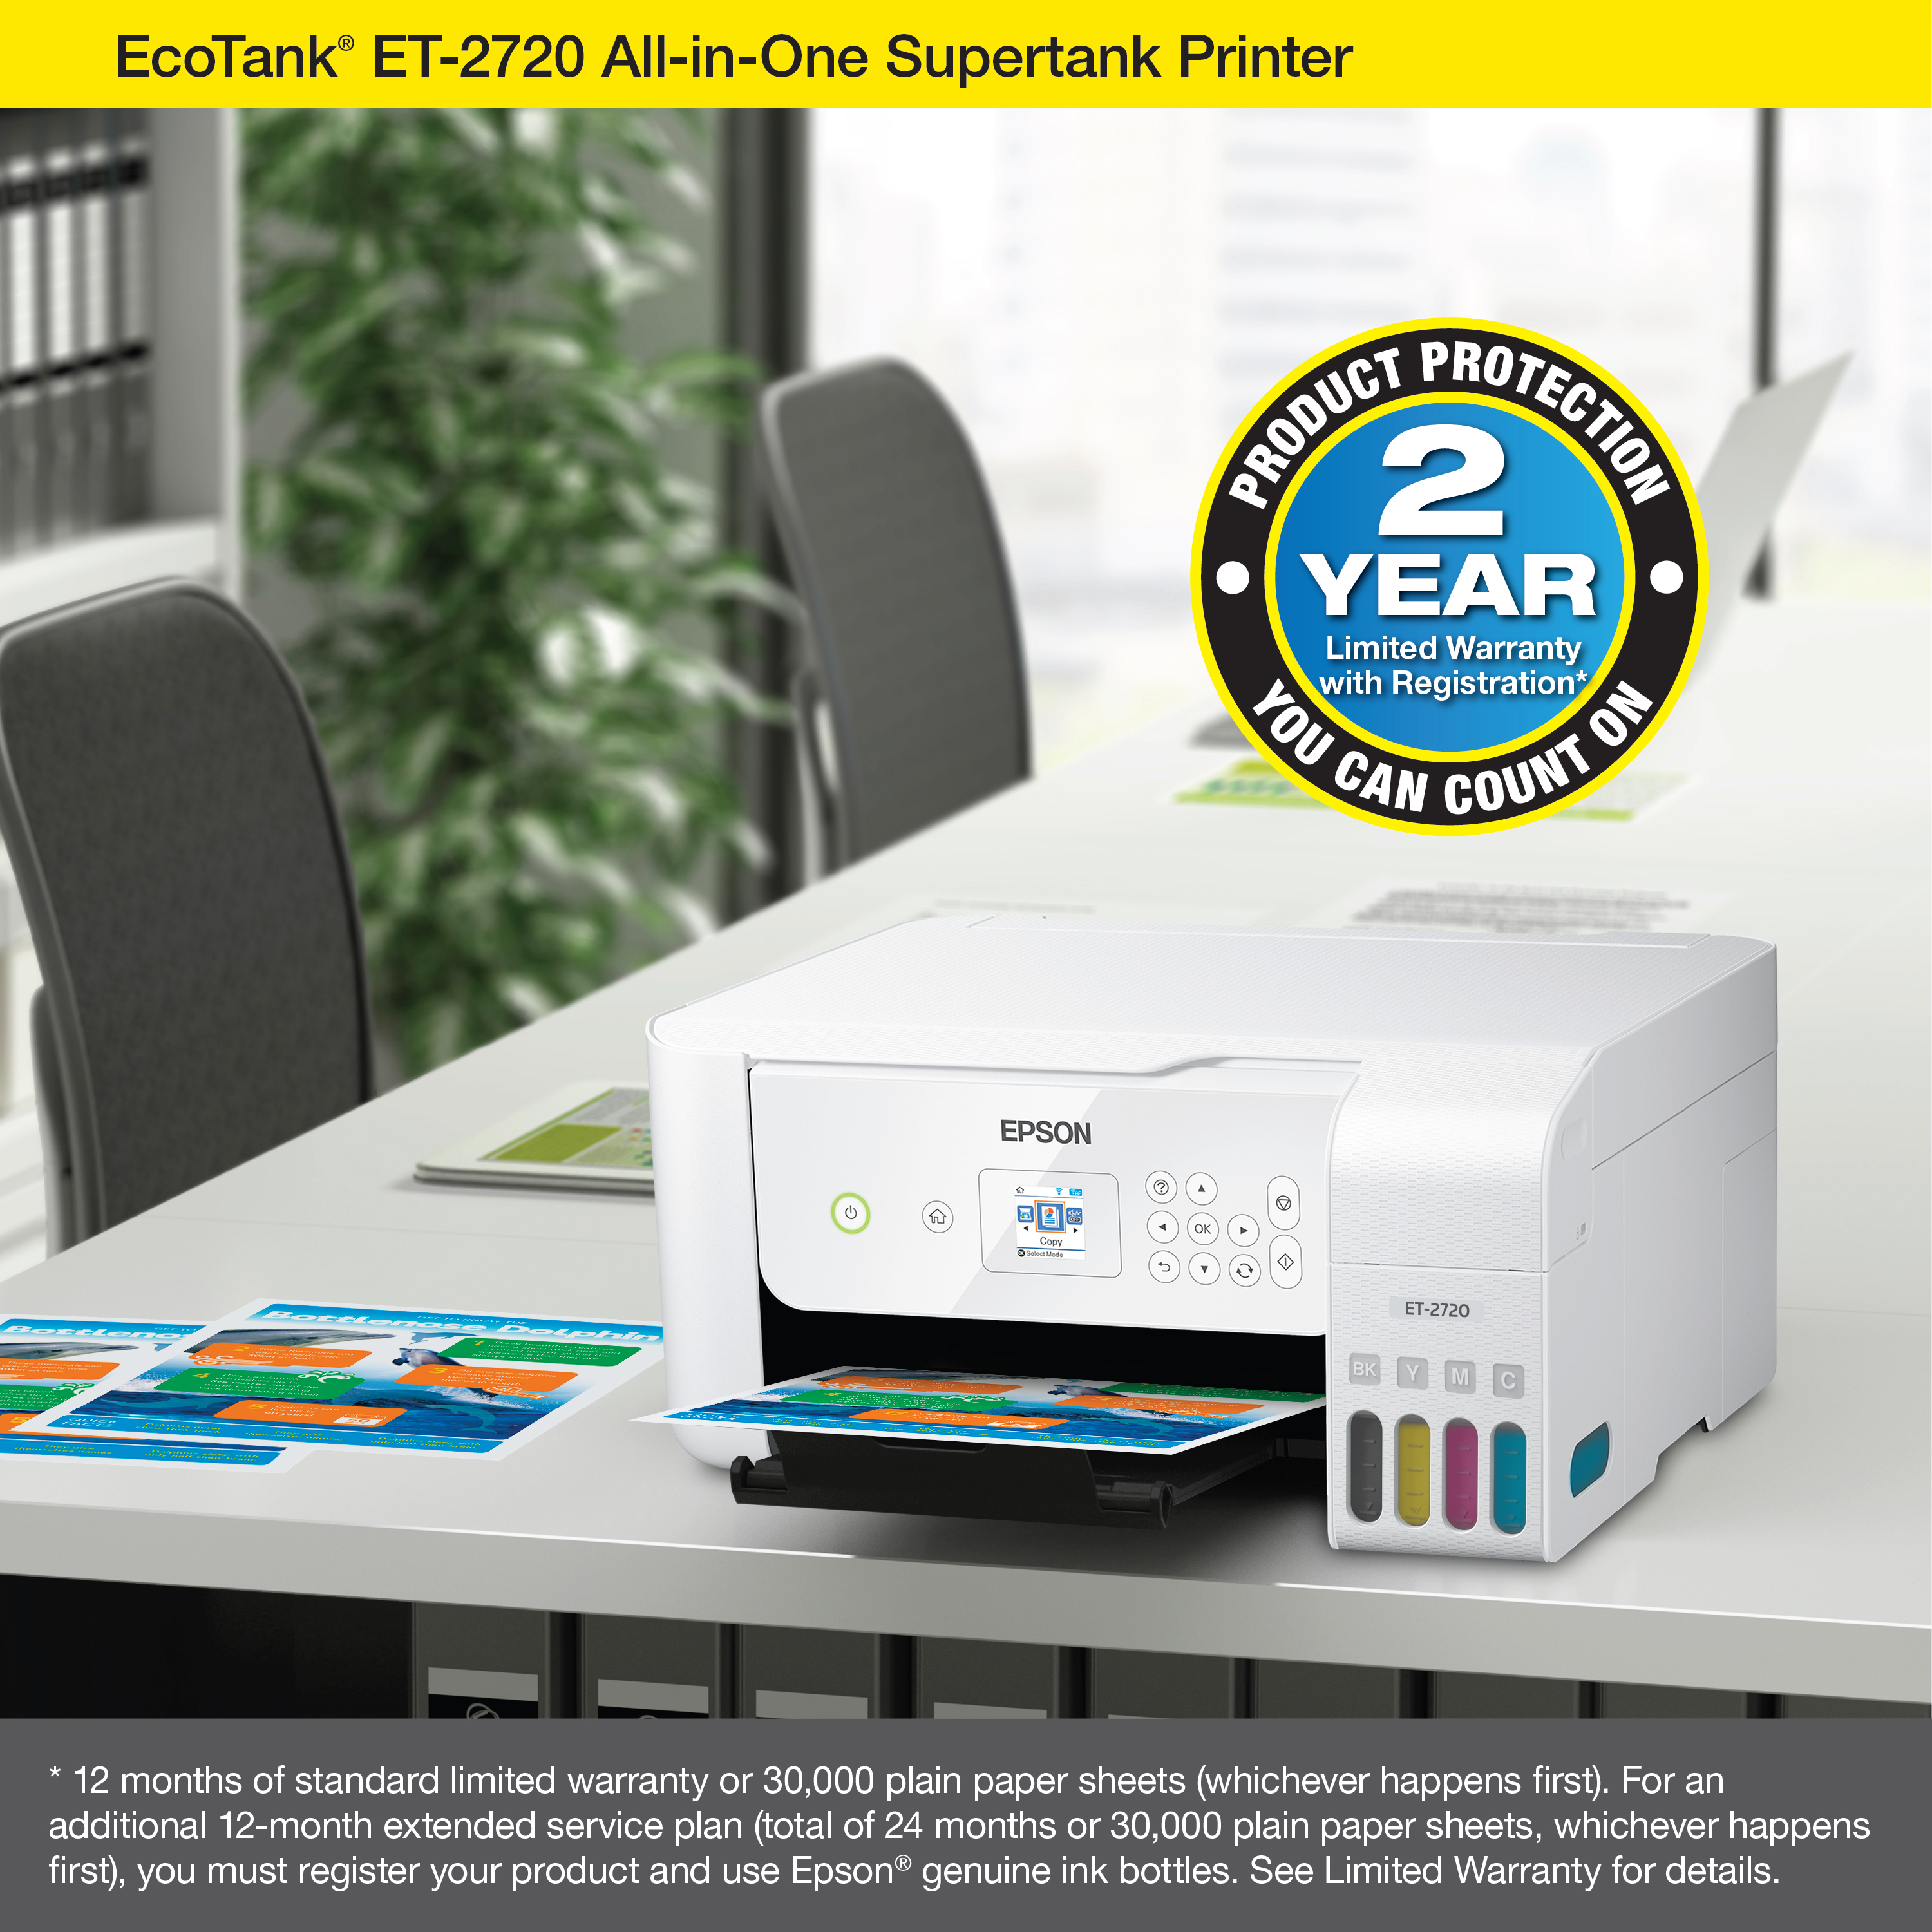 Epson C11CH42202 EcoTank ET-2720 All-in-One Supertank Printer - White - image 3 of 7